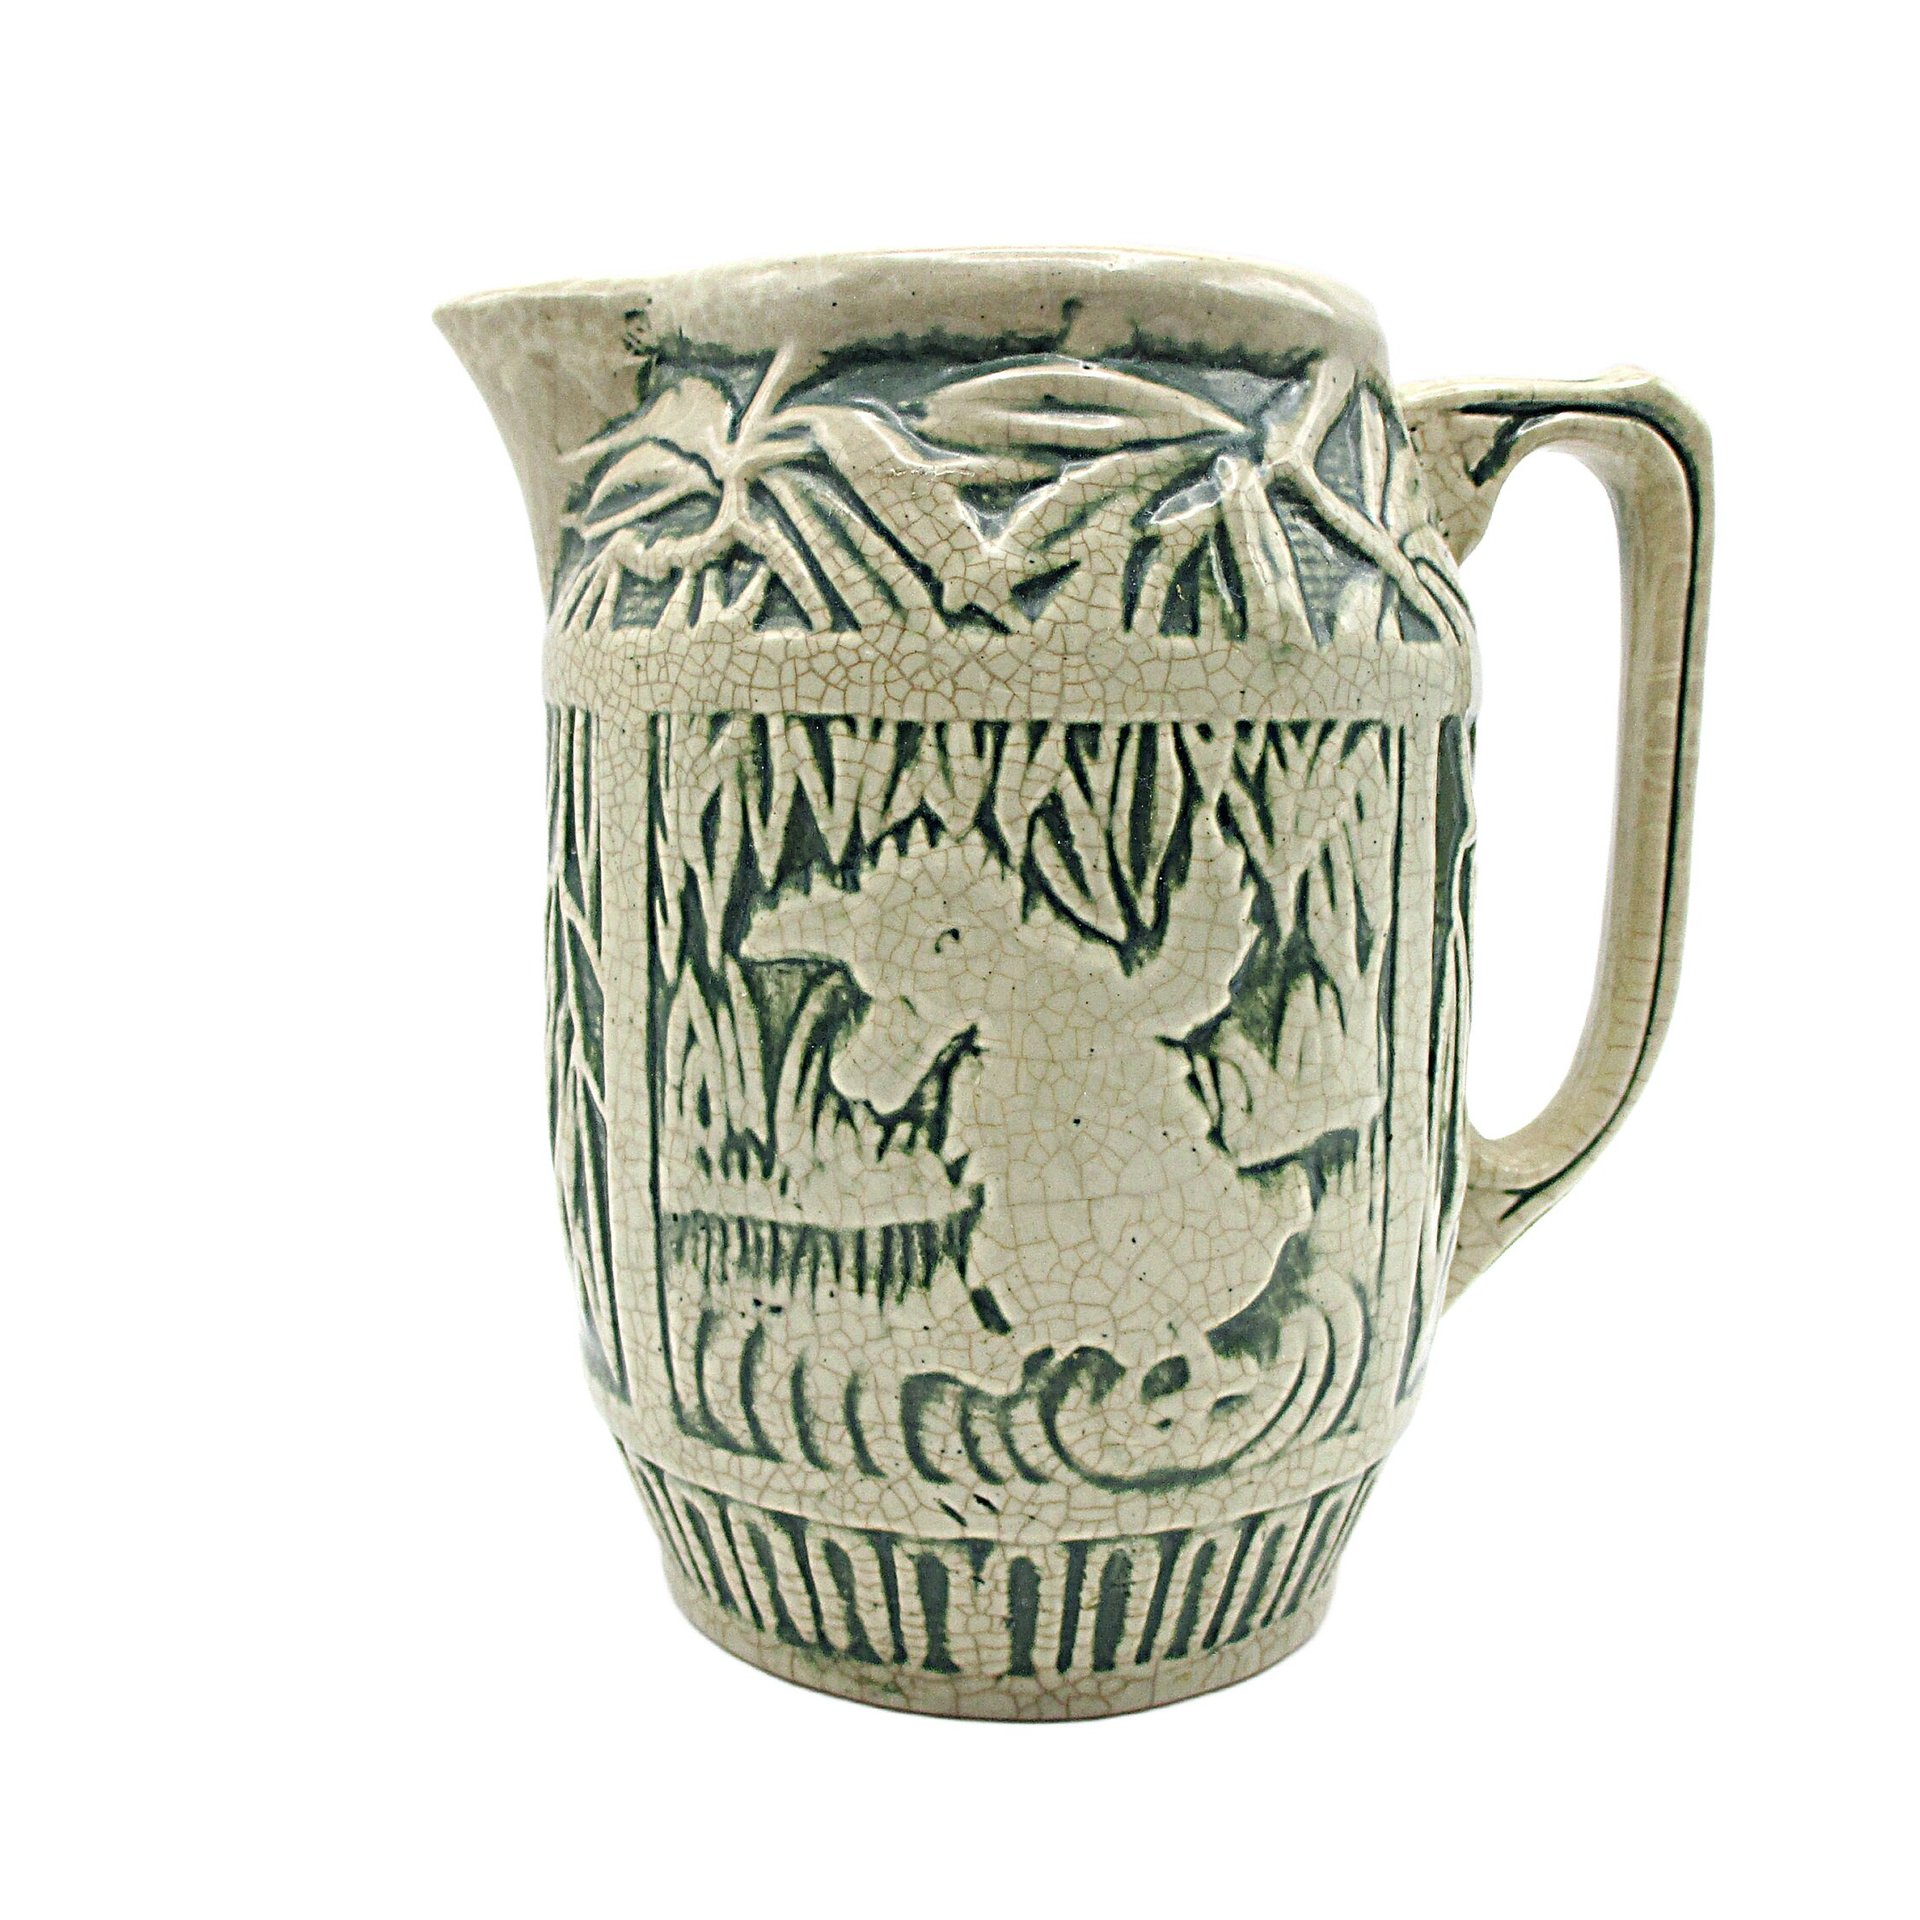 Weller Pottery Pitcher, Zona The Splashing Duck, Green Glaze, Art Pottery, Stoneware 1920s